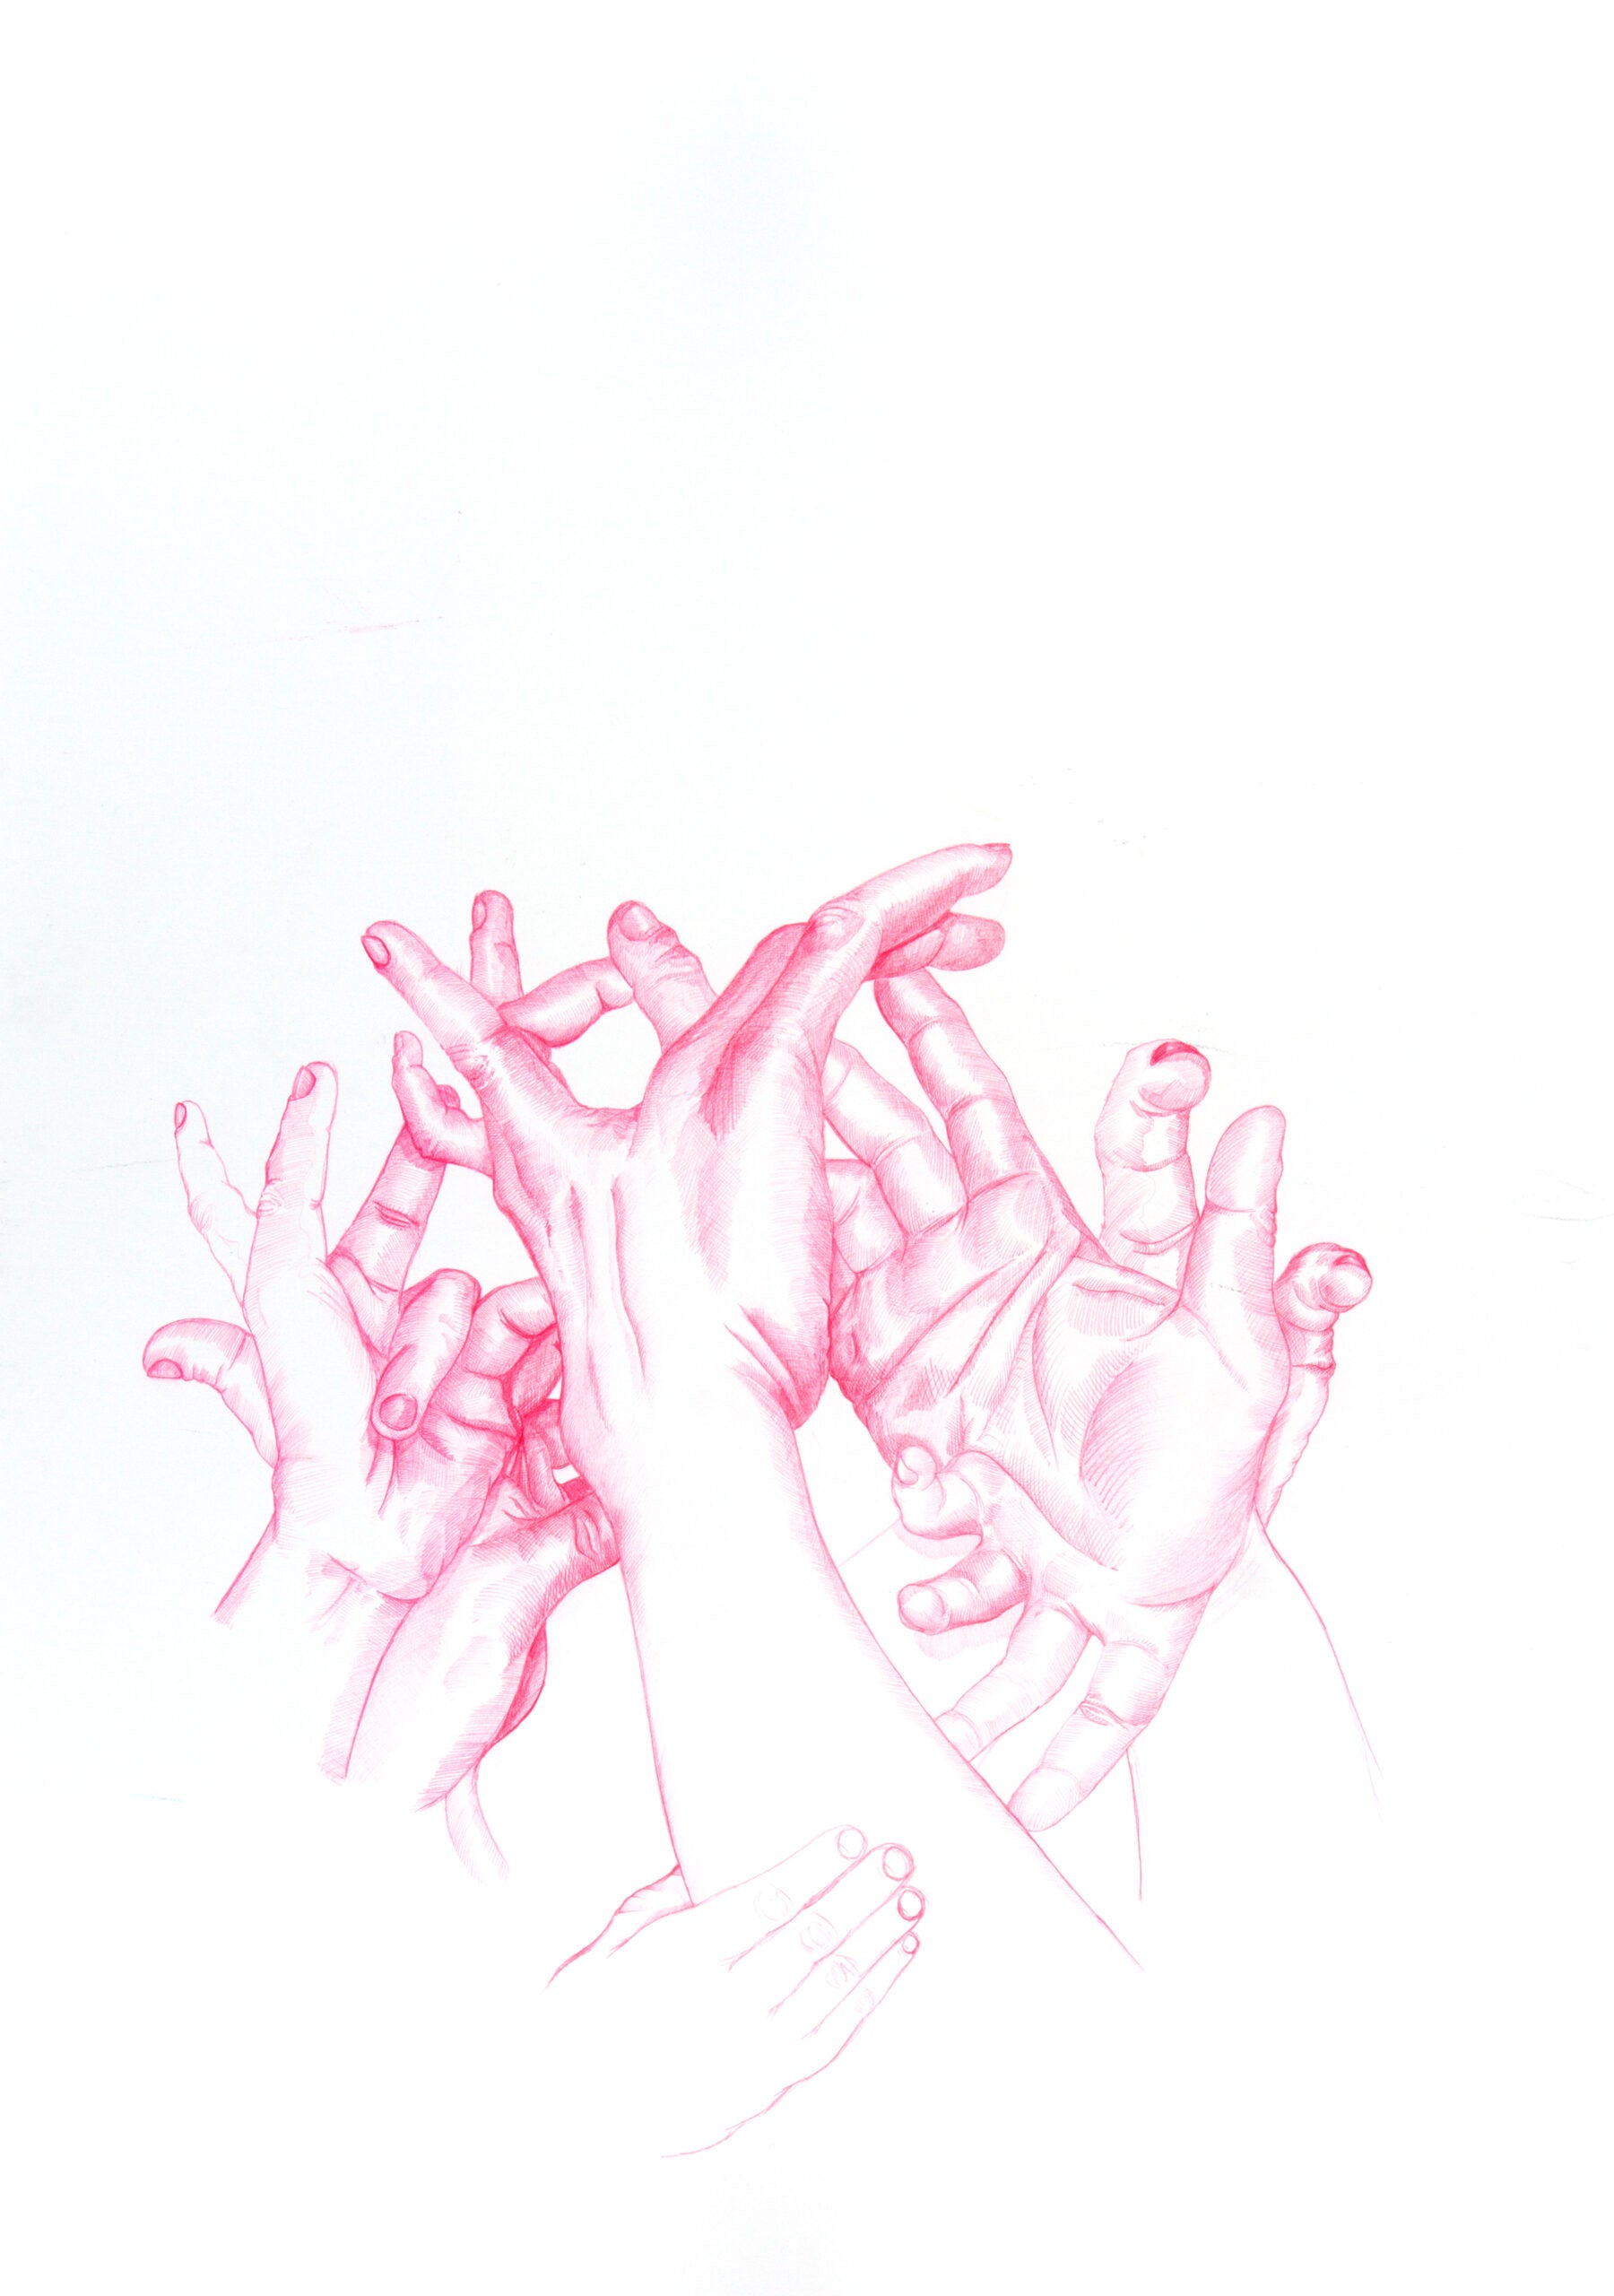 Hand study 148